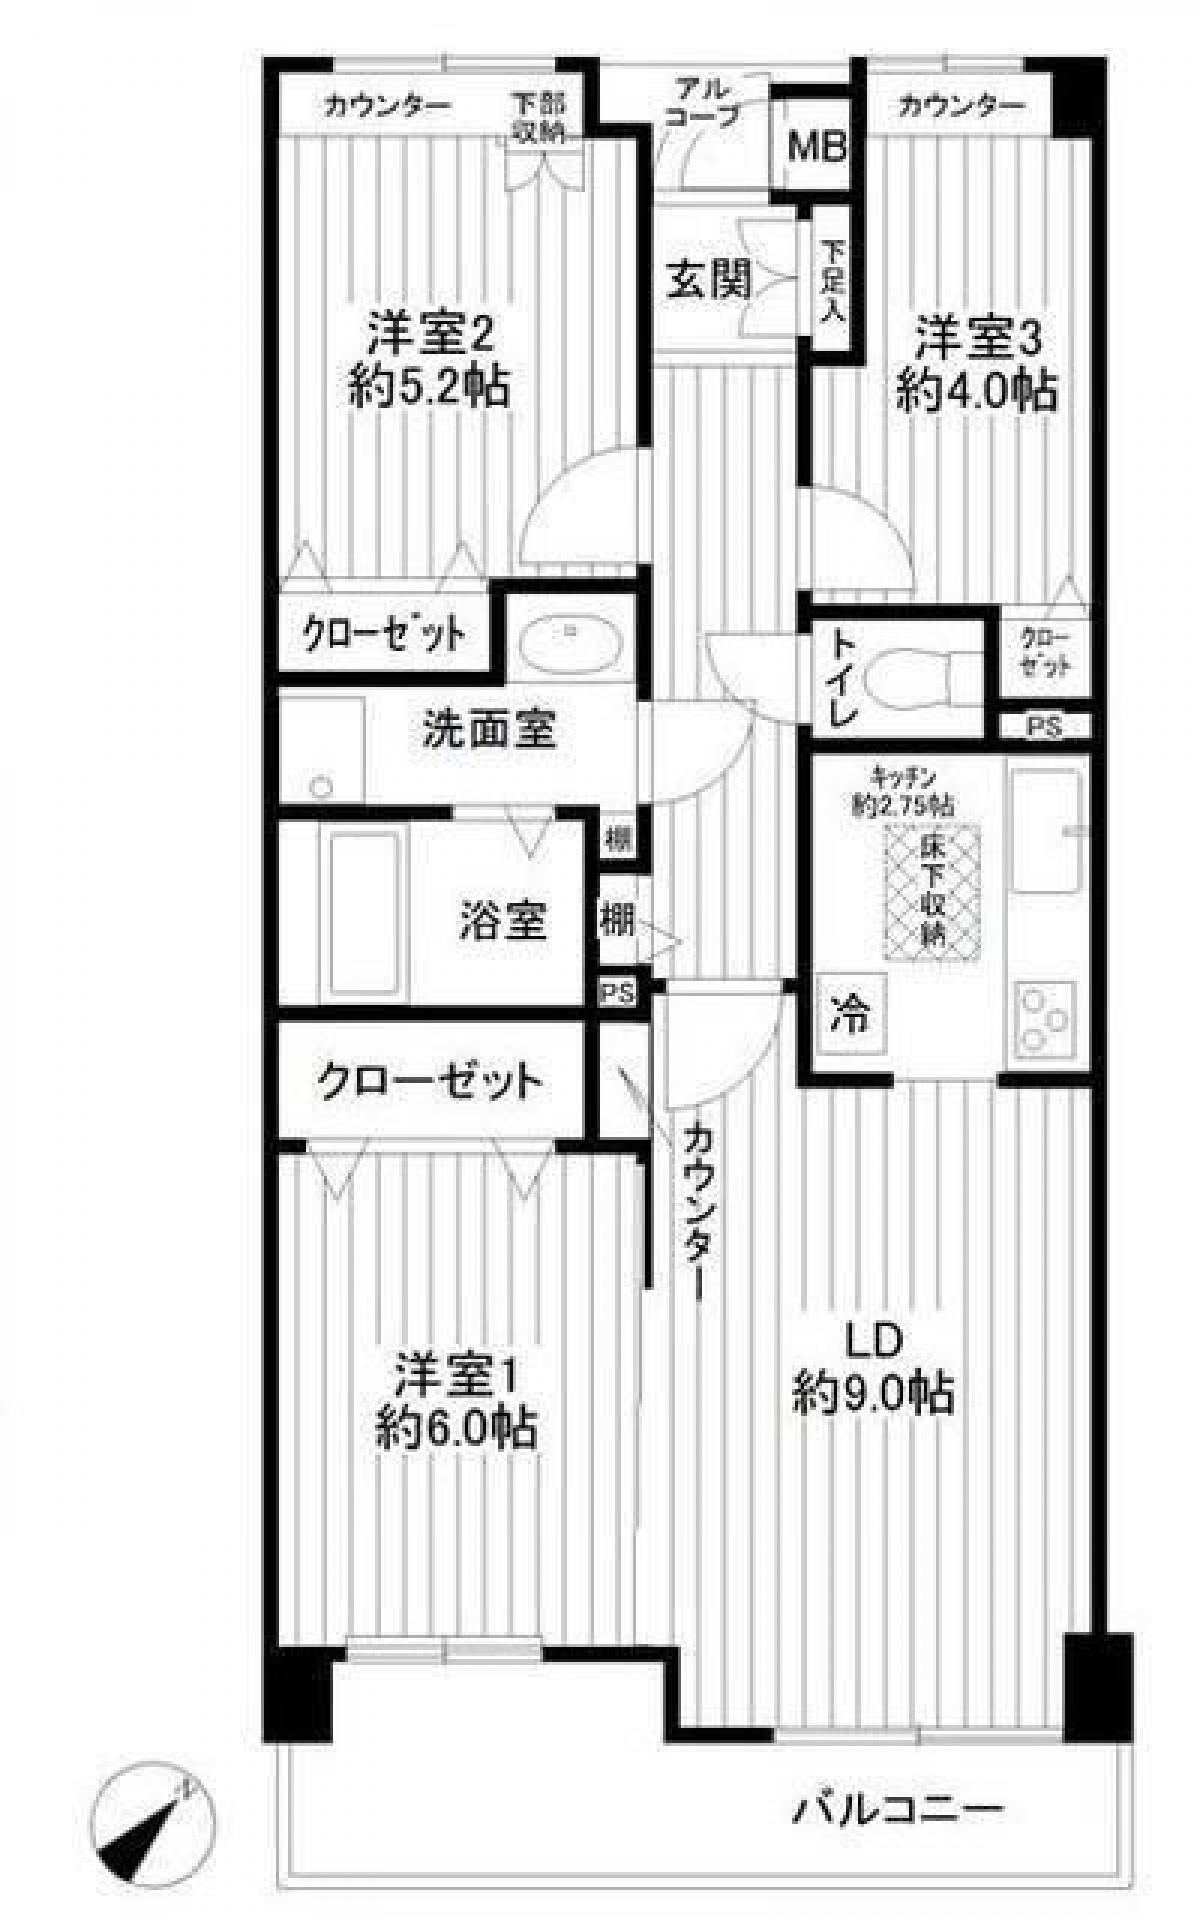 Picture of Apartment For Sale in Yokohama Shi Tsurumi Ku, Kanagawa, Japan